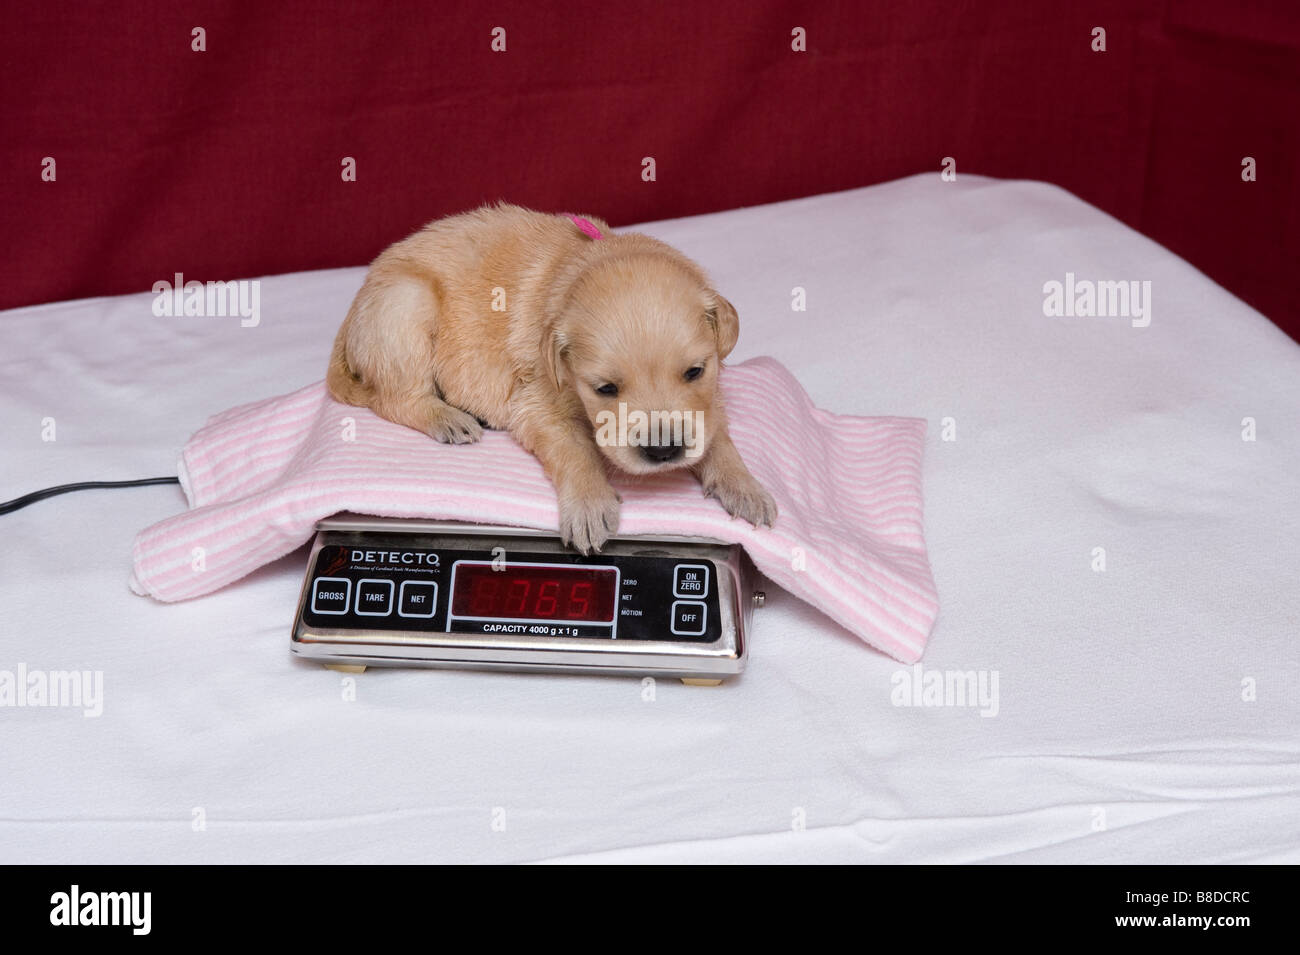 https://c8.alamy.com/comp/B8DCRC/newborn-puppy-getting-weighed-B8DCRC.jpg